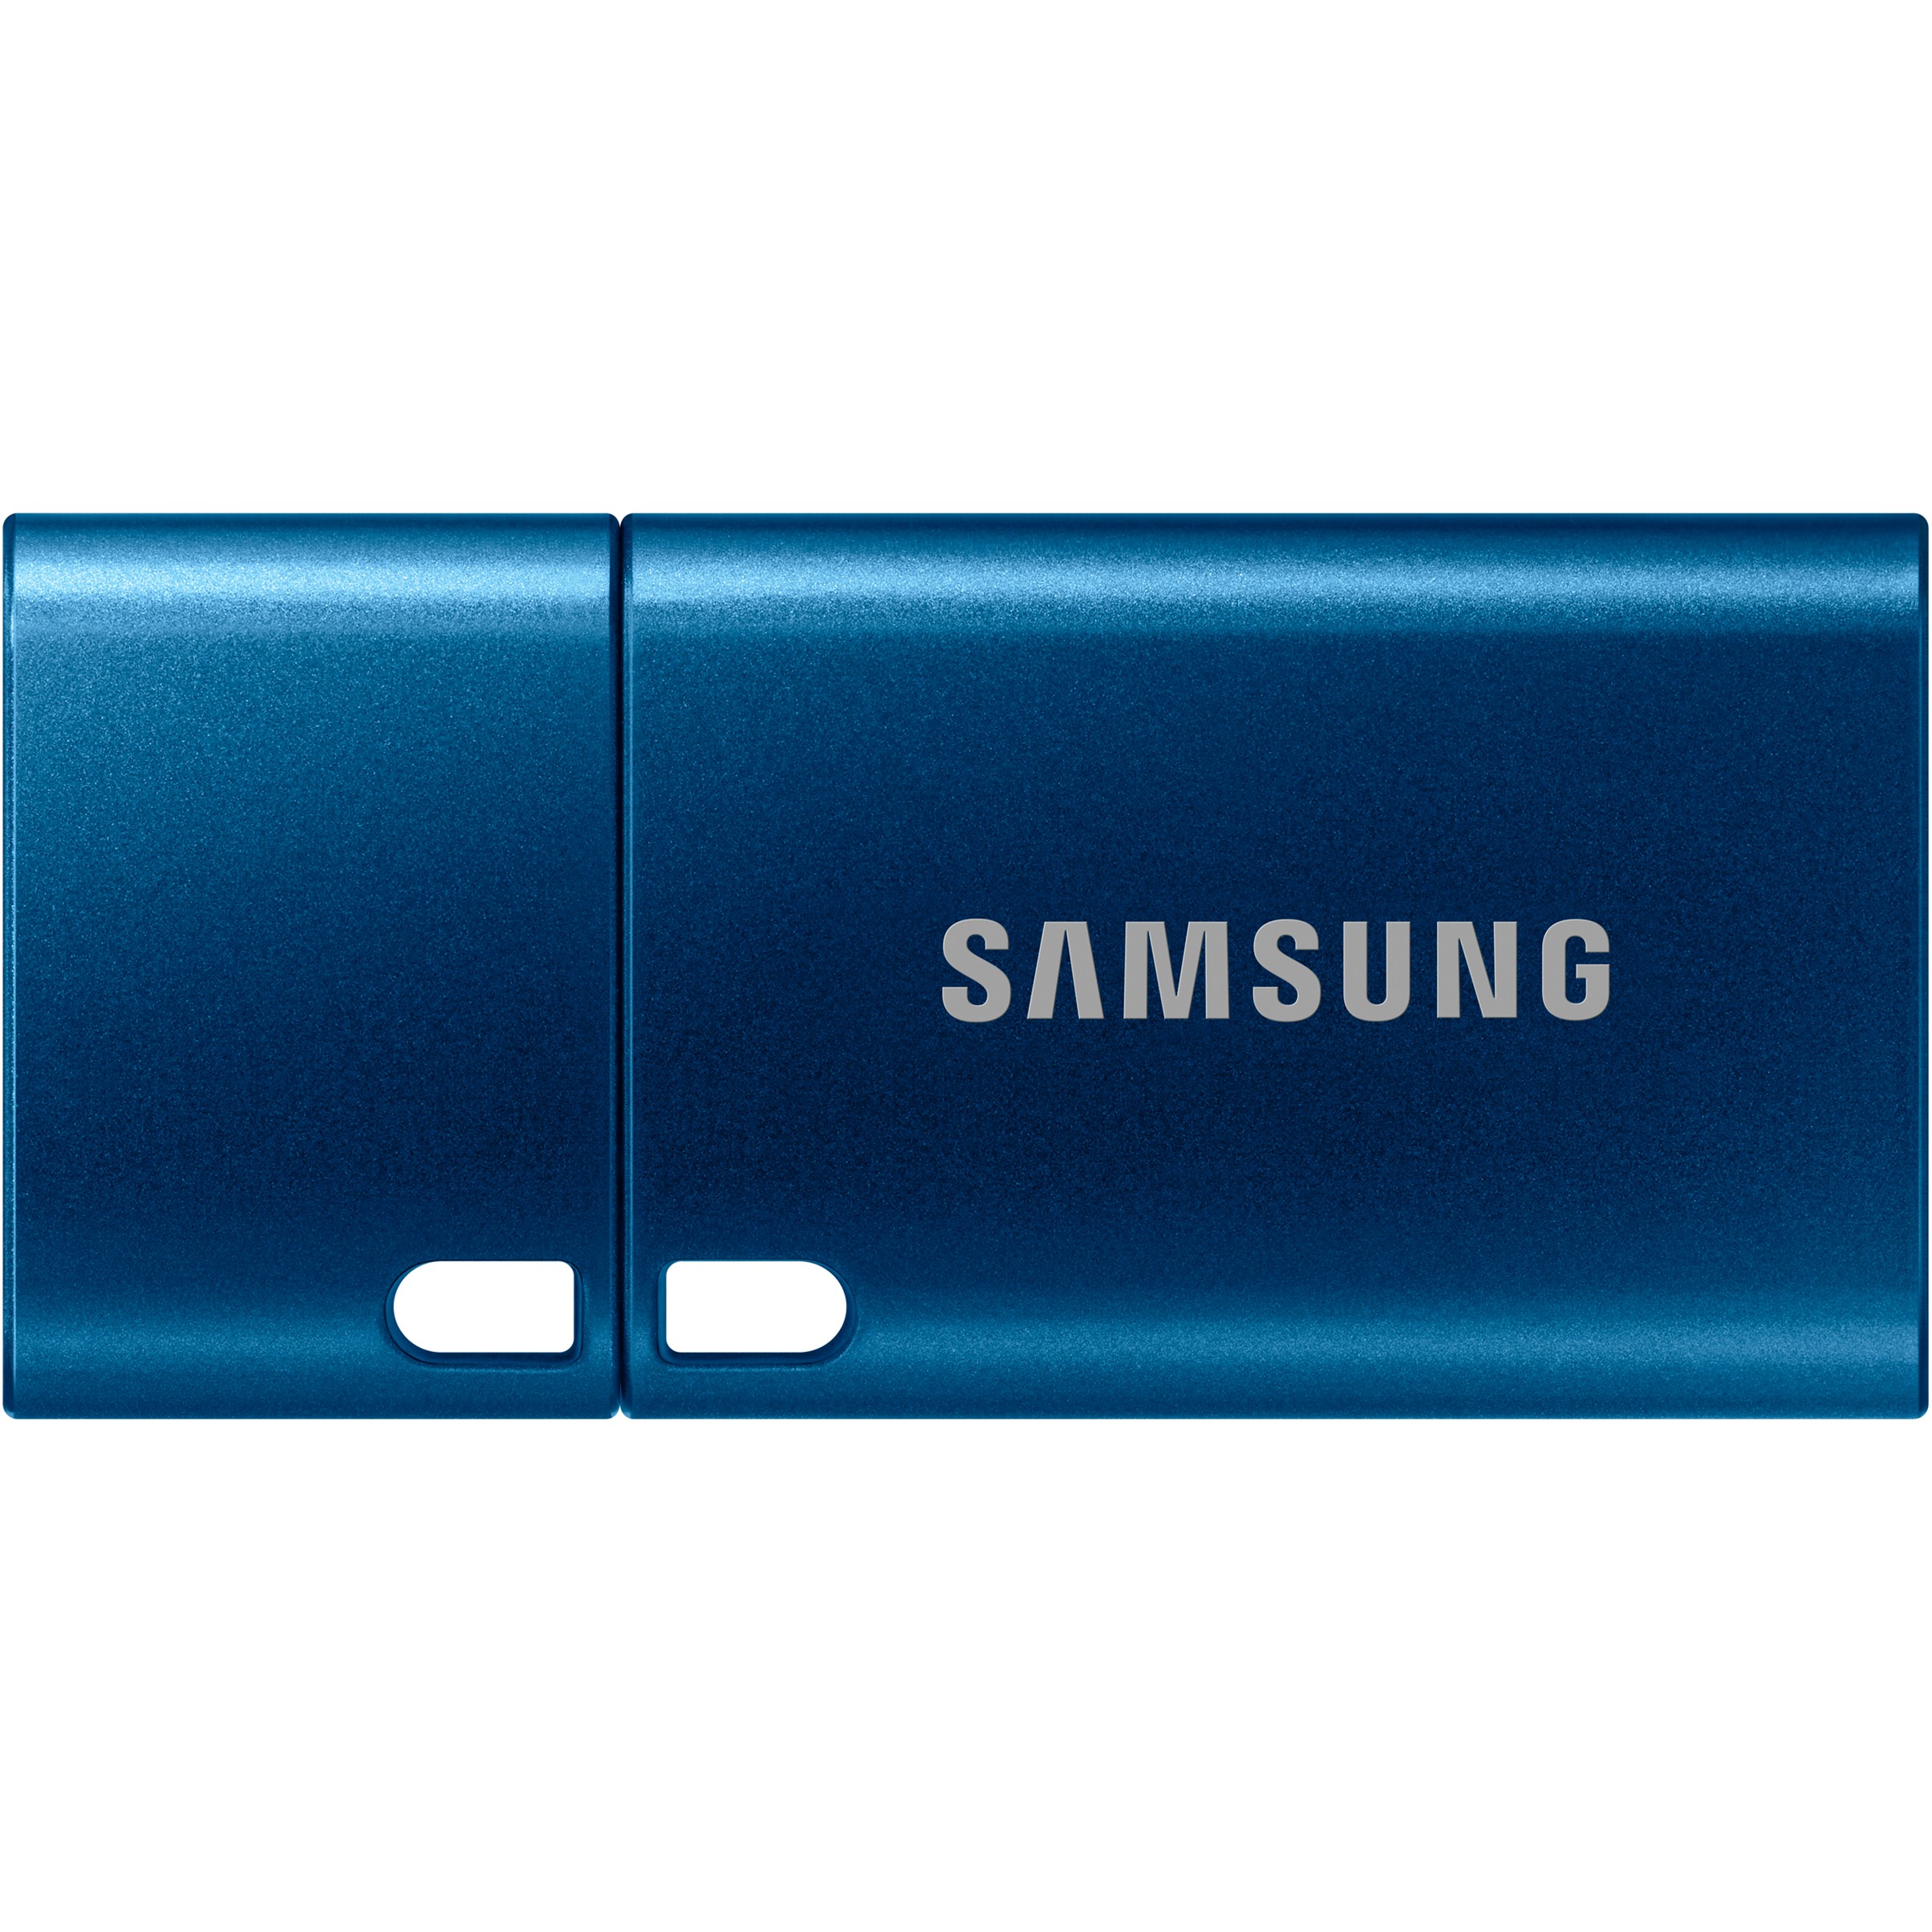 SAMSUNG MUF-128DA/APC, USB-Stick, Samsung MUF-128DA USB  (BILD1)